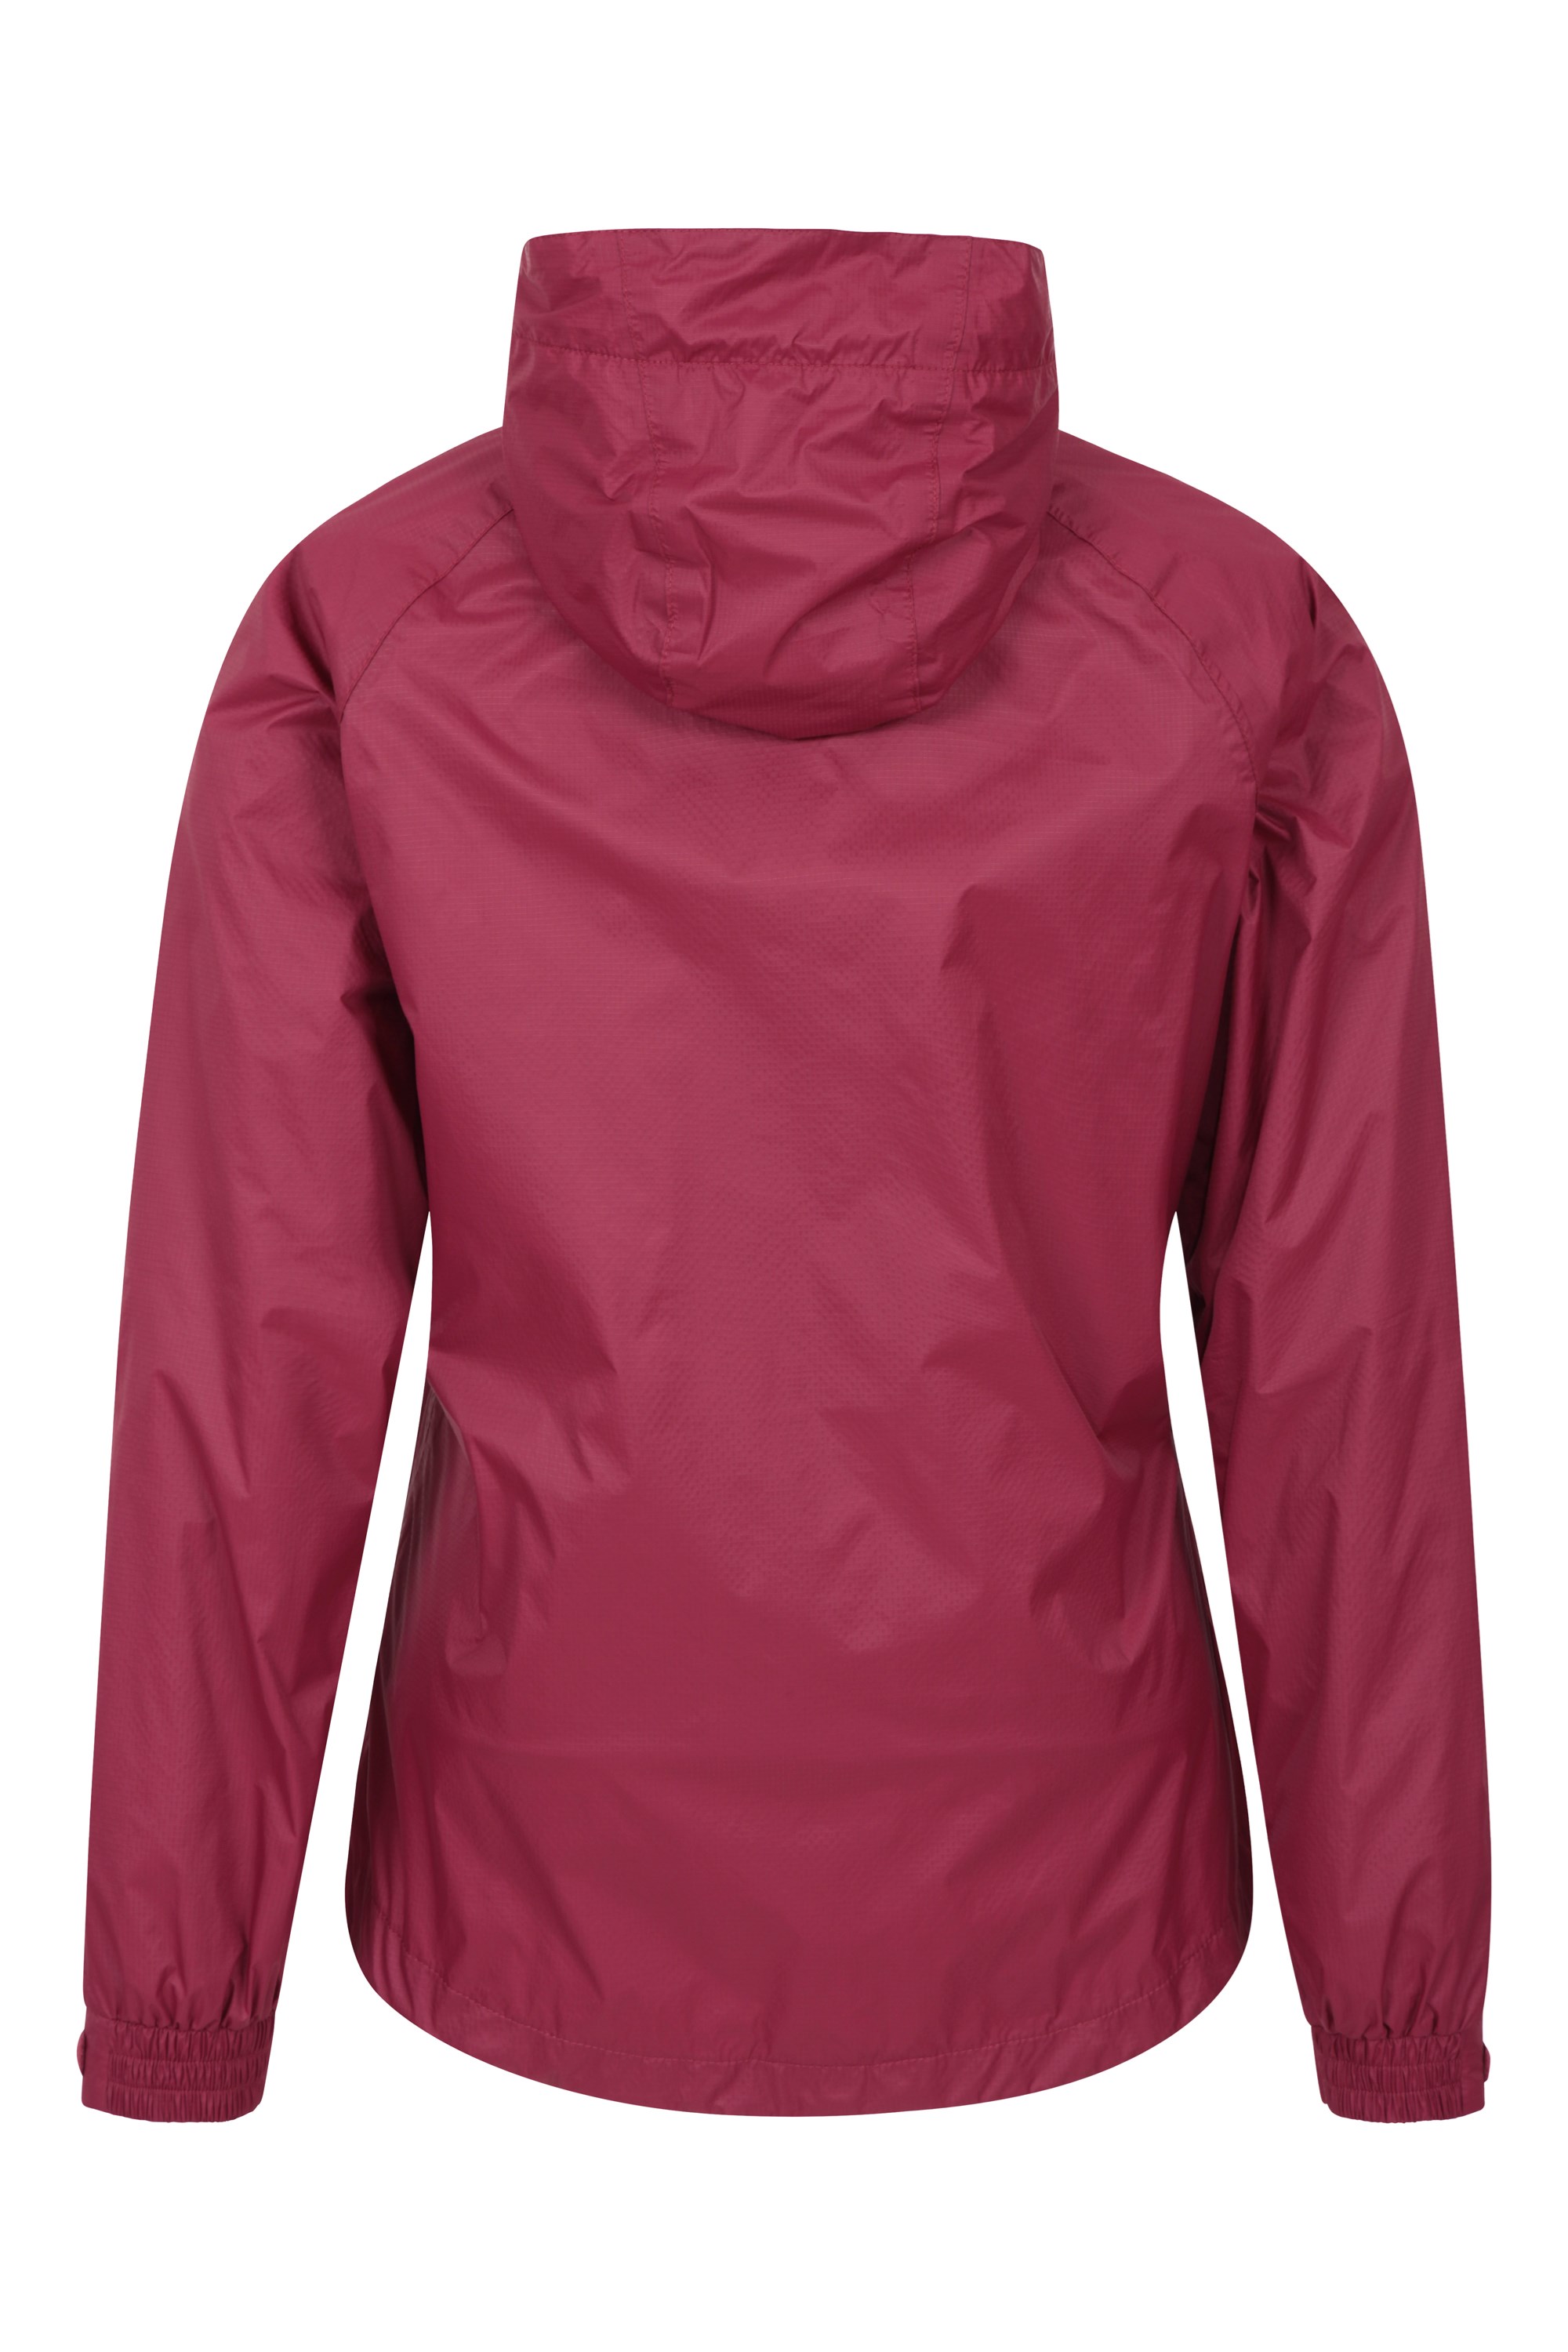 Torrent Womens Lightweight Waterproof Jacket